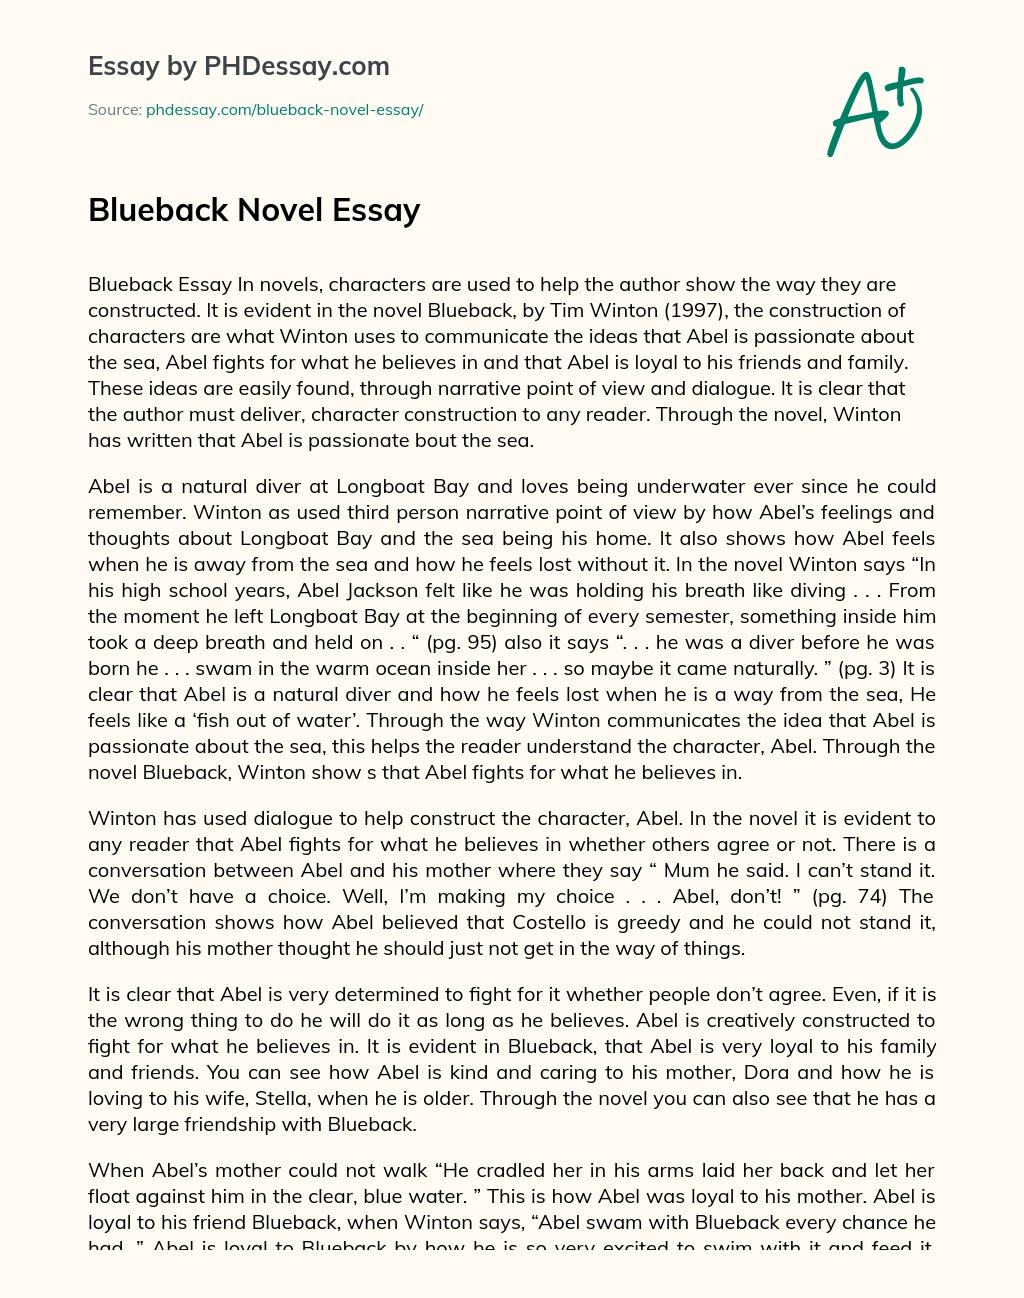 Blueback Novel Essay essay